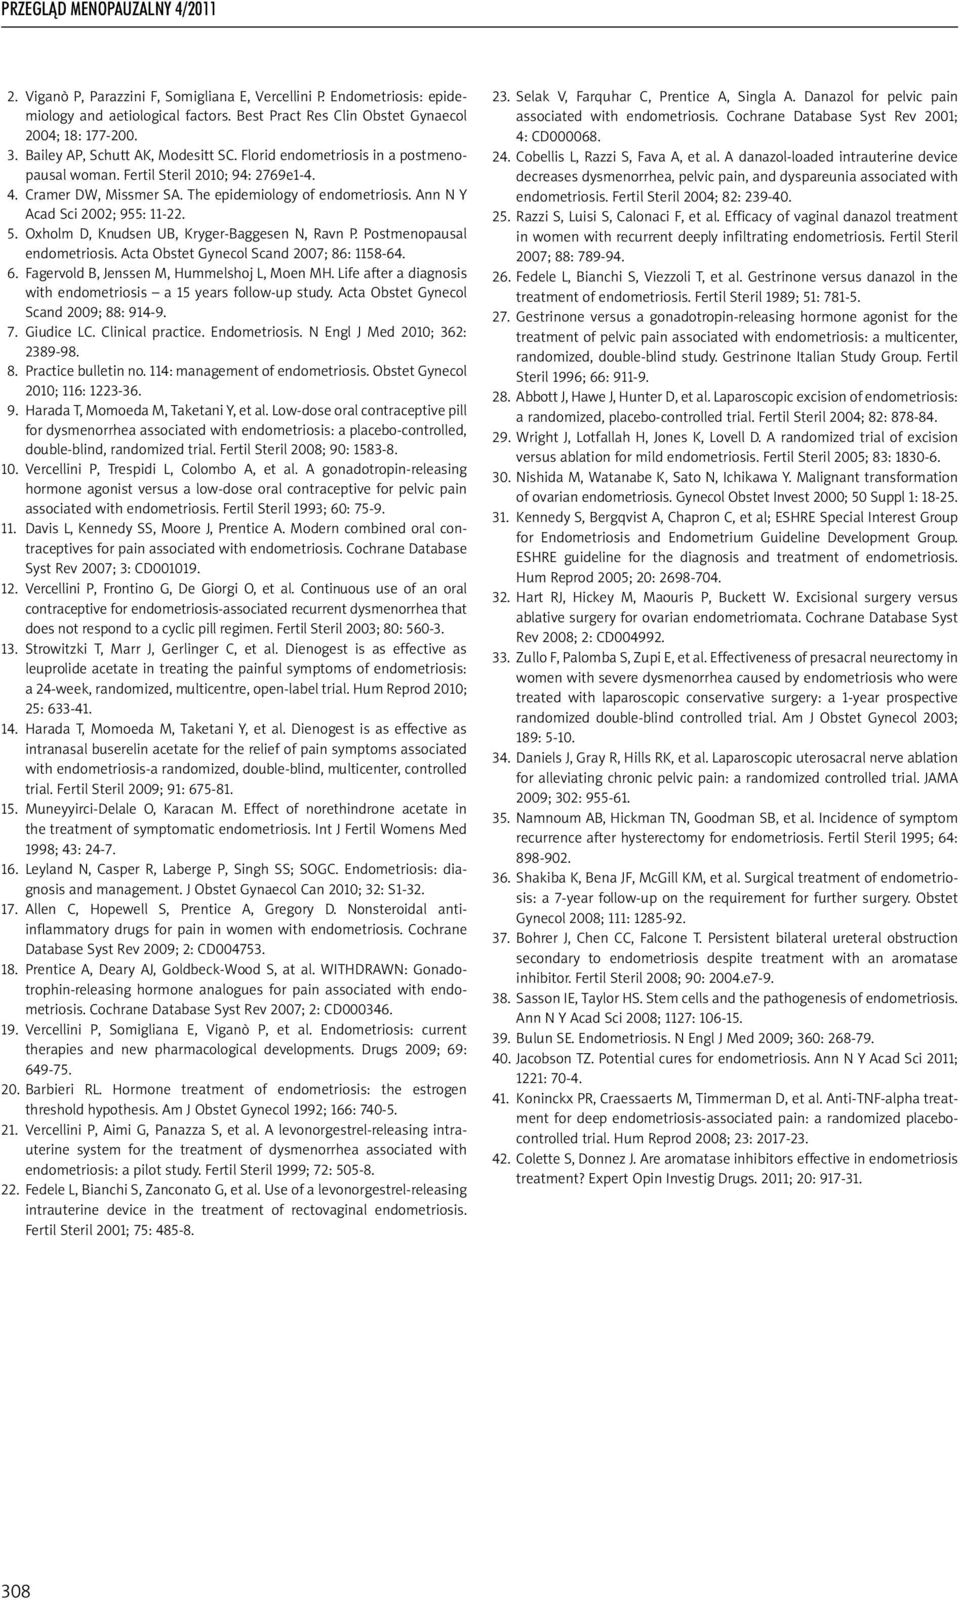 Oxholm D, Knudsen UB, Kryger-Baggesen N, Ravn P. Postmenopausal endometriosis. Acta Obstet Gynecol Scand 2007; 86: 1158-64. 6. Fagervold B, Jenssen M, Hummelshoj L, Moen MH.